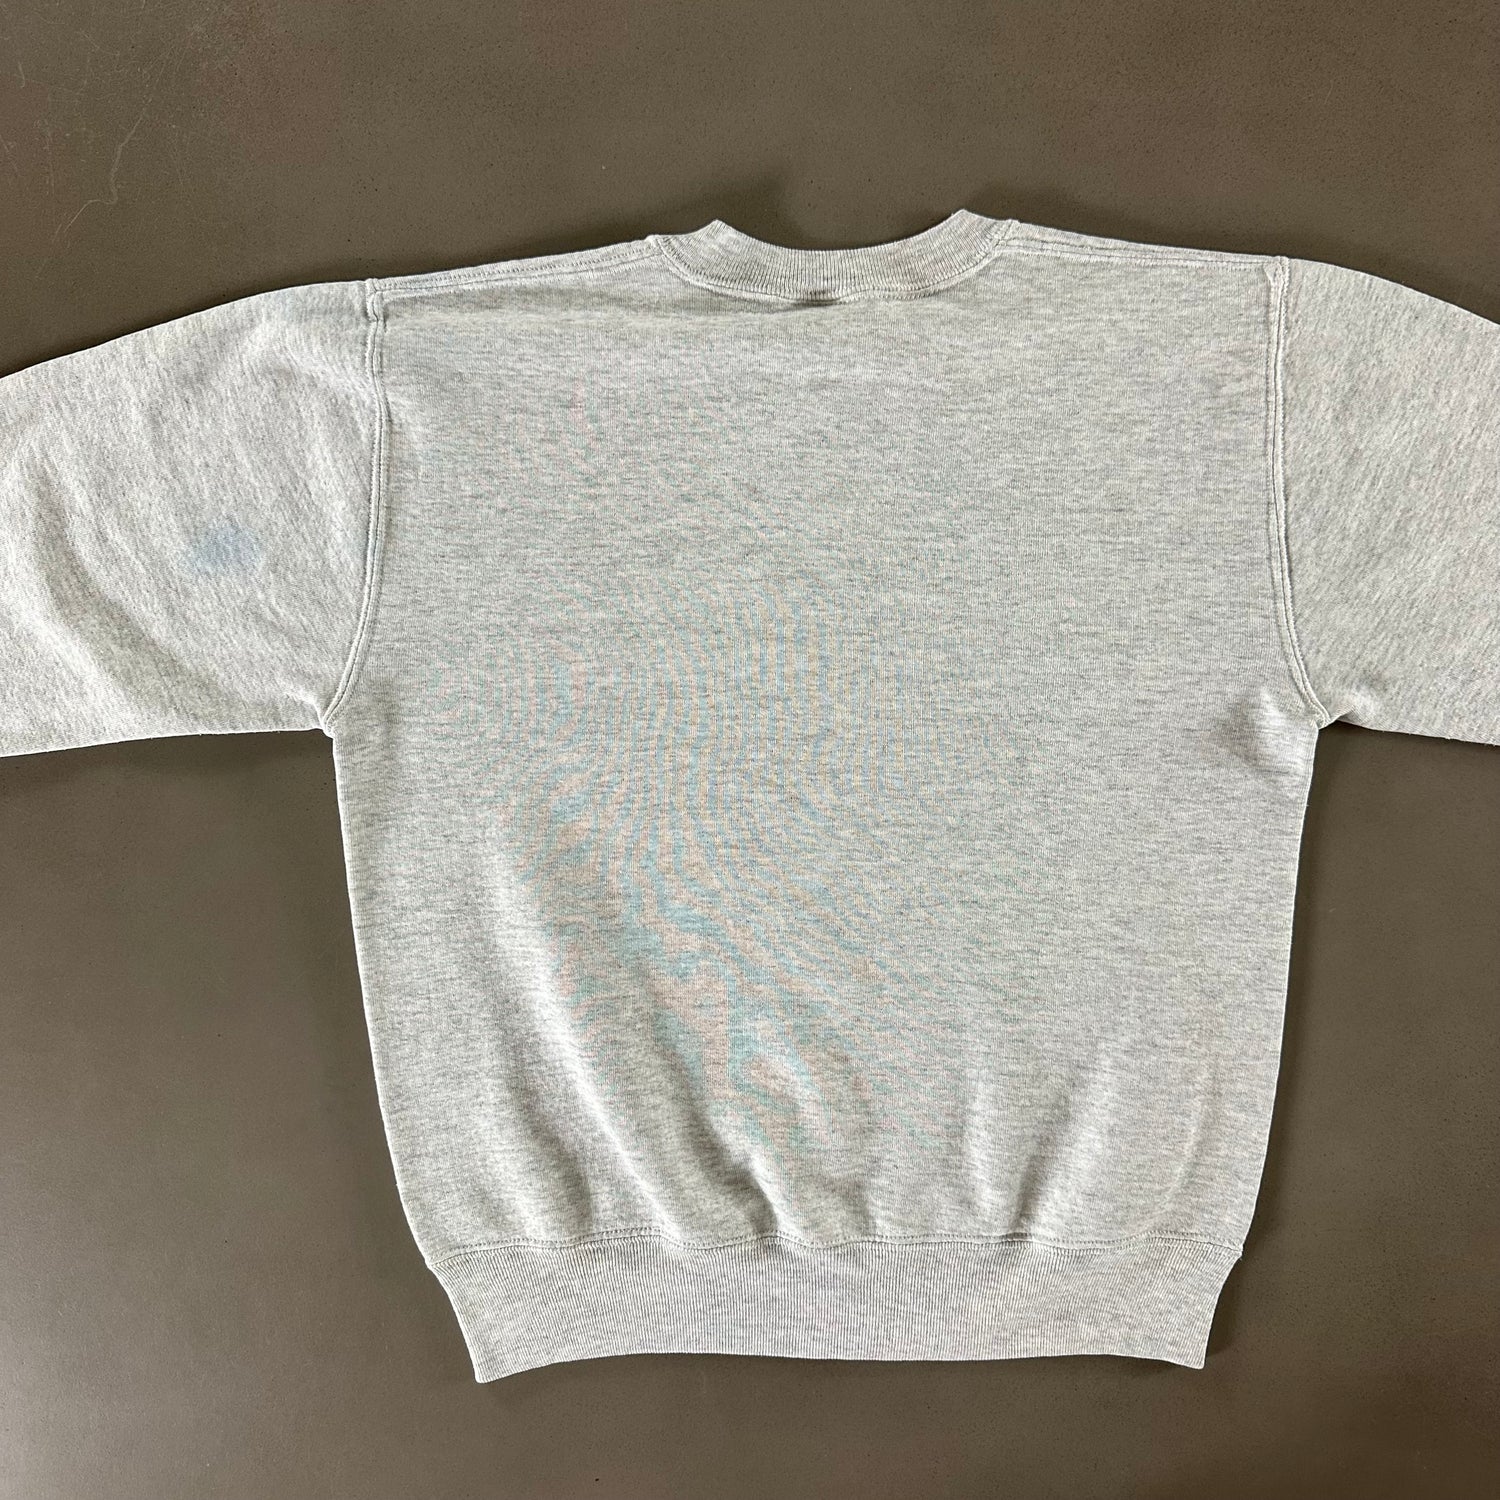 Vintage 1990s Williams College Sweatshirt size Medium